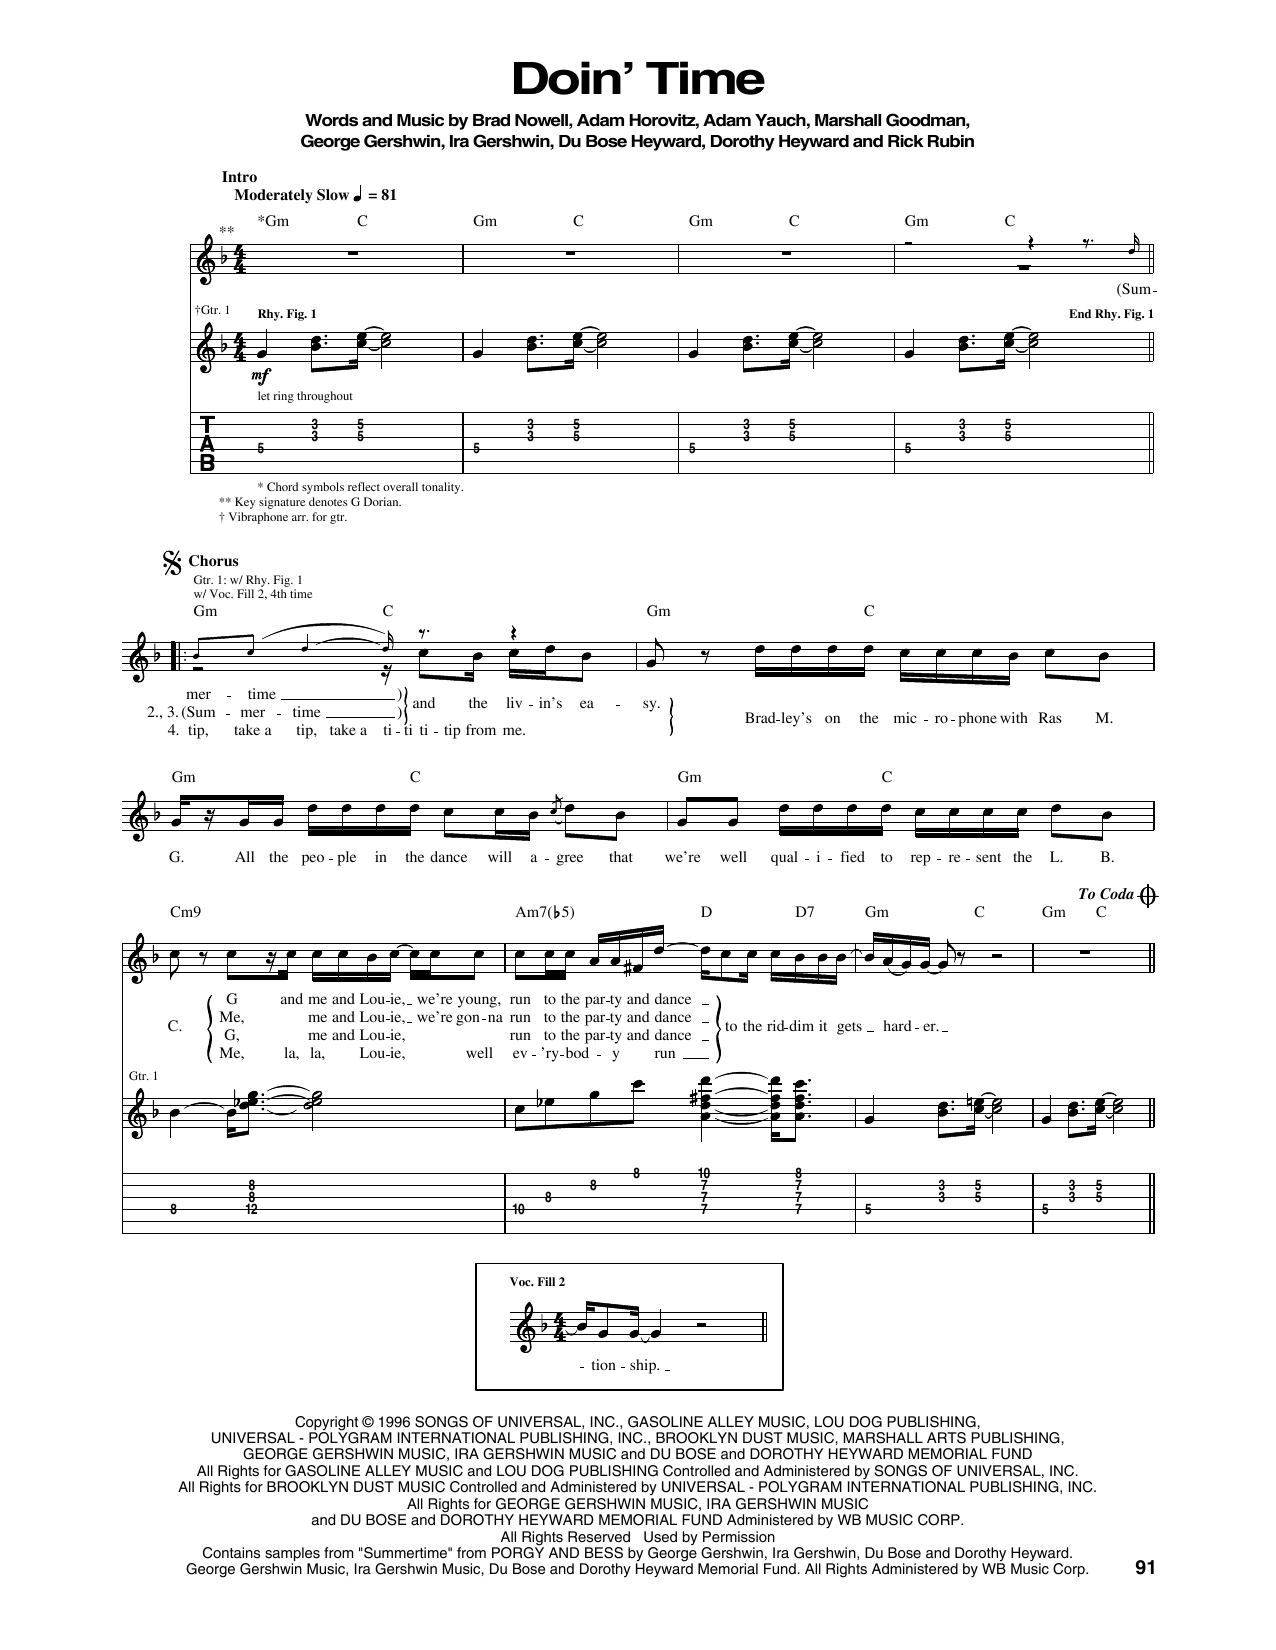 Sublime Doin' Time Sheet Music Notes & Chords for Ukulele - Download or Print PDF